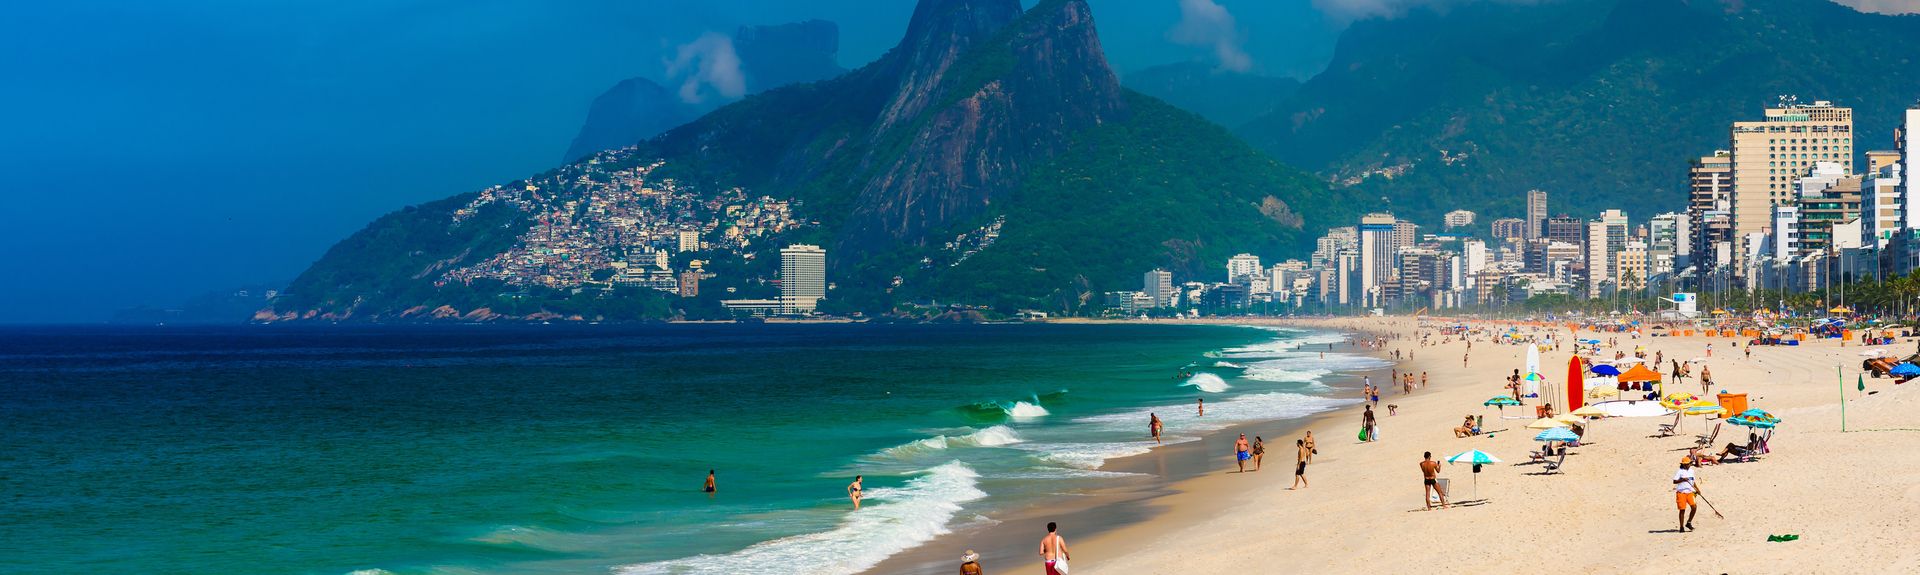 Ipanema Beach / Rio de Janeiro / Brazil // World Beach Guide